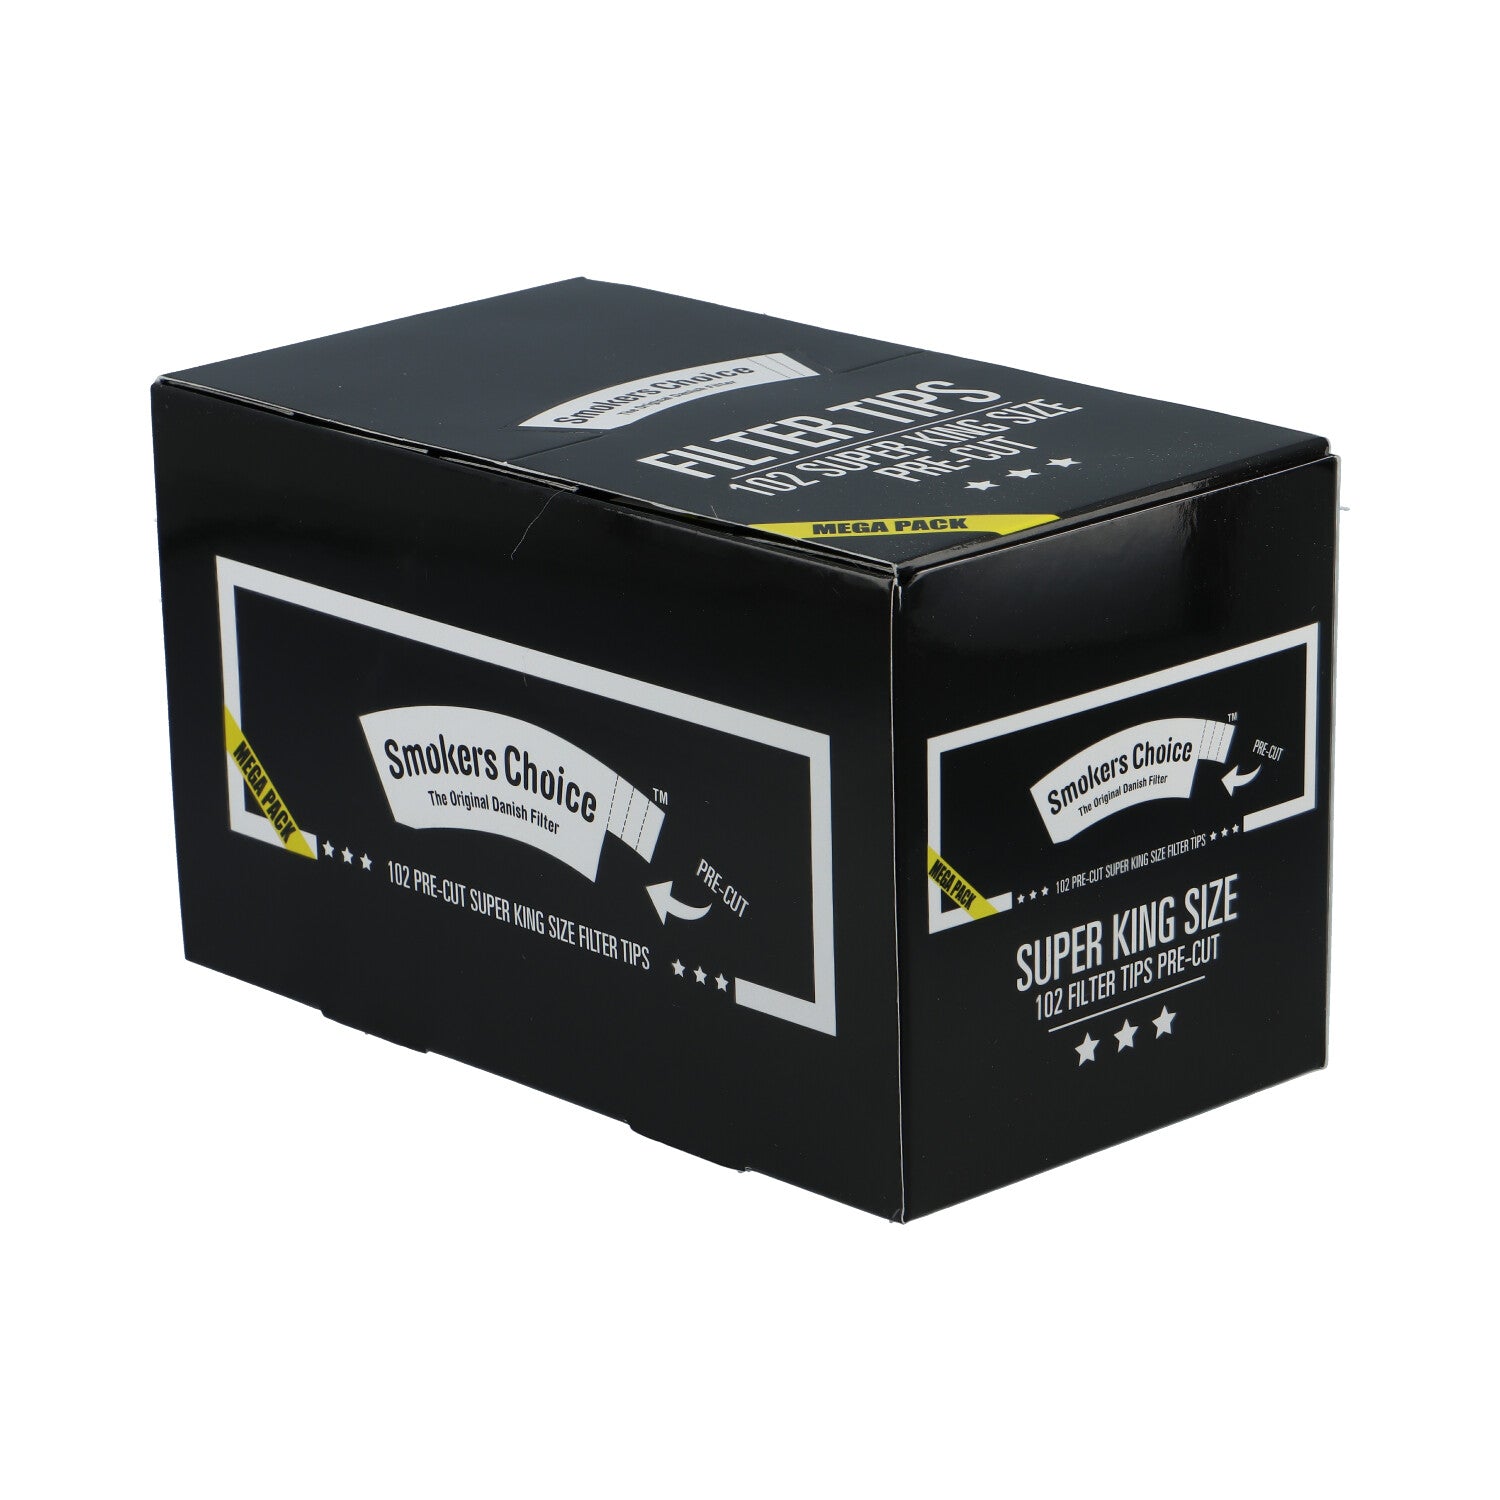 Smokers Choice Filter Tips Black Pre-Cut Super King Size Mega Pack Box closed